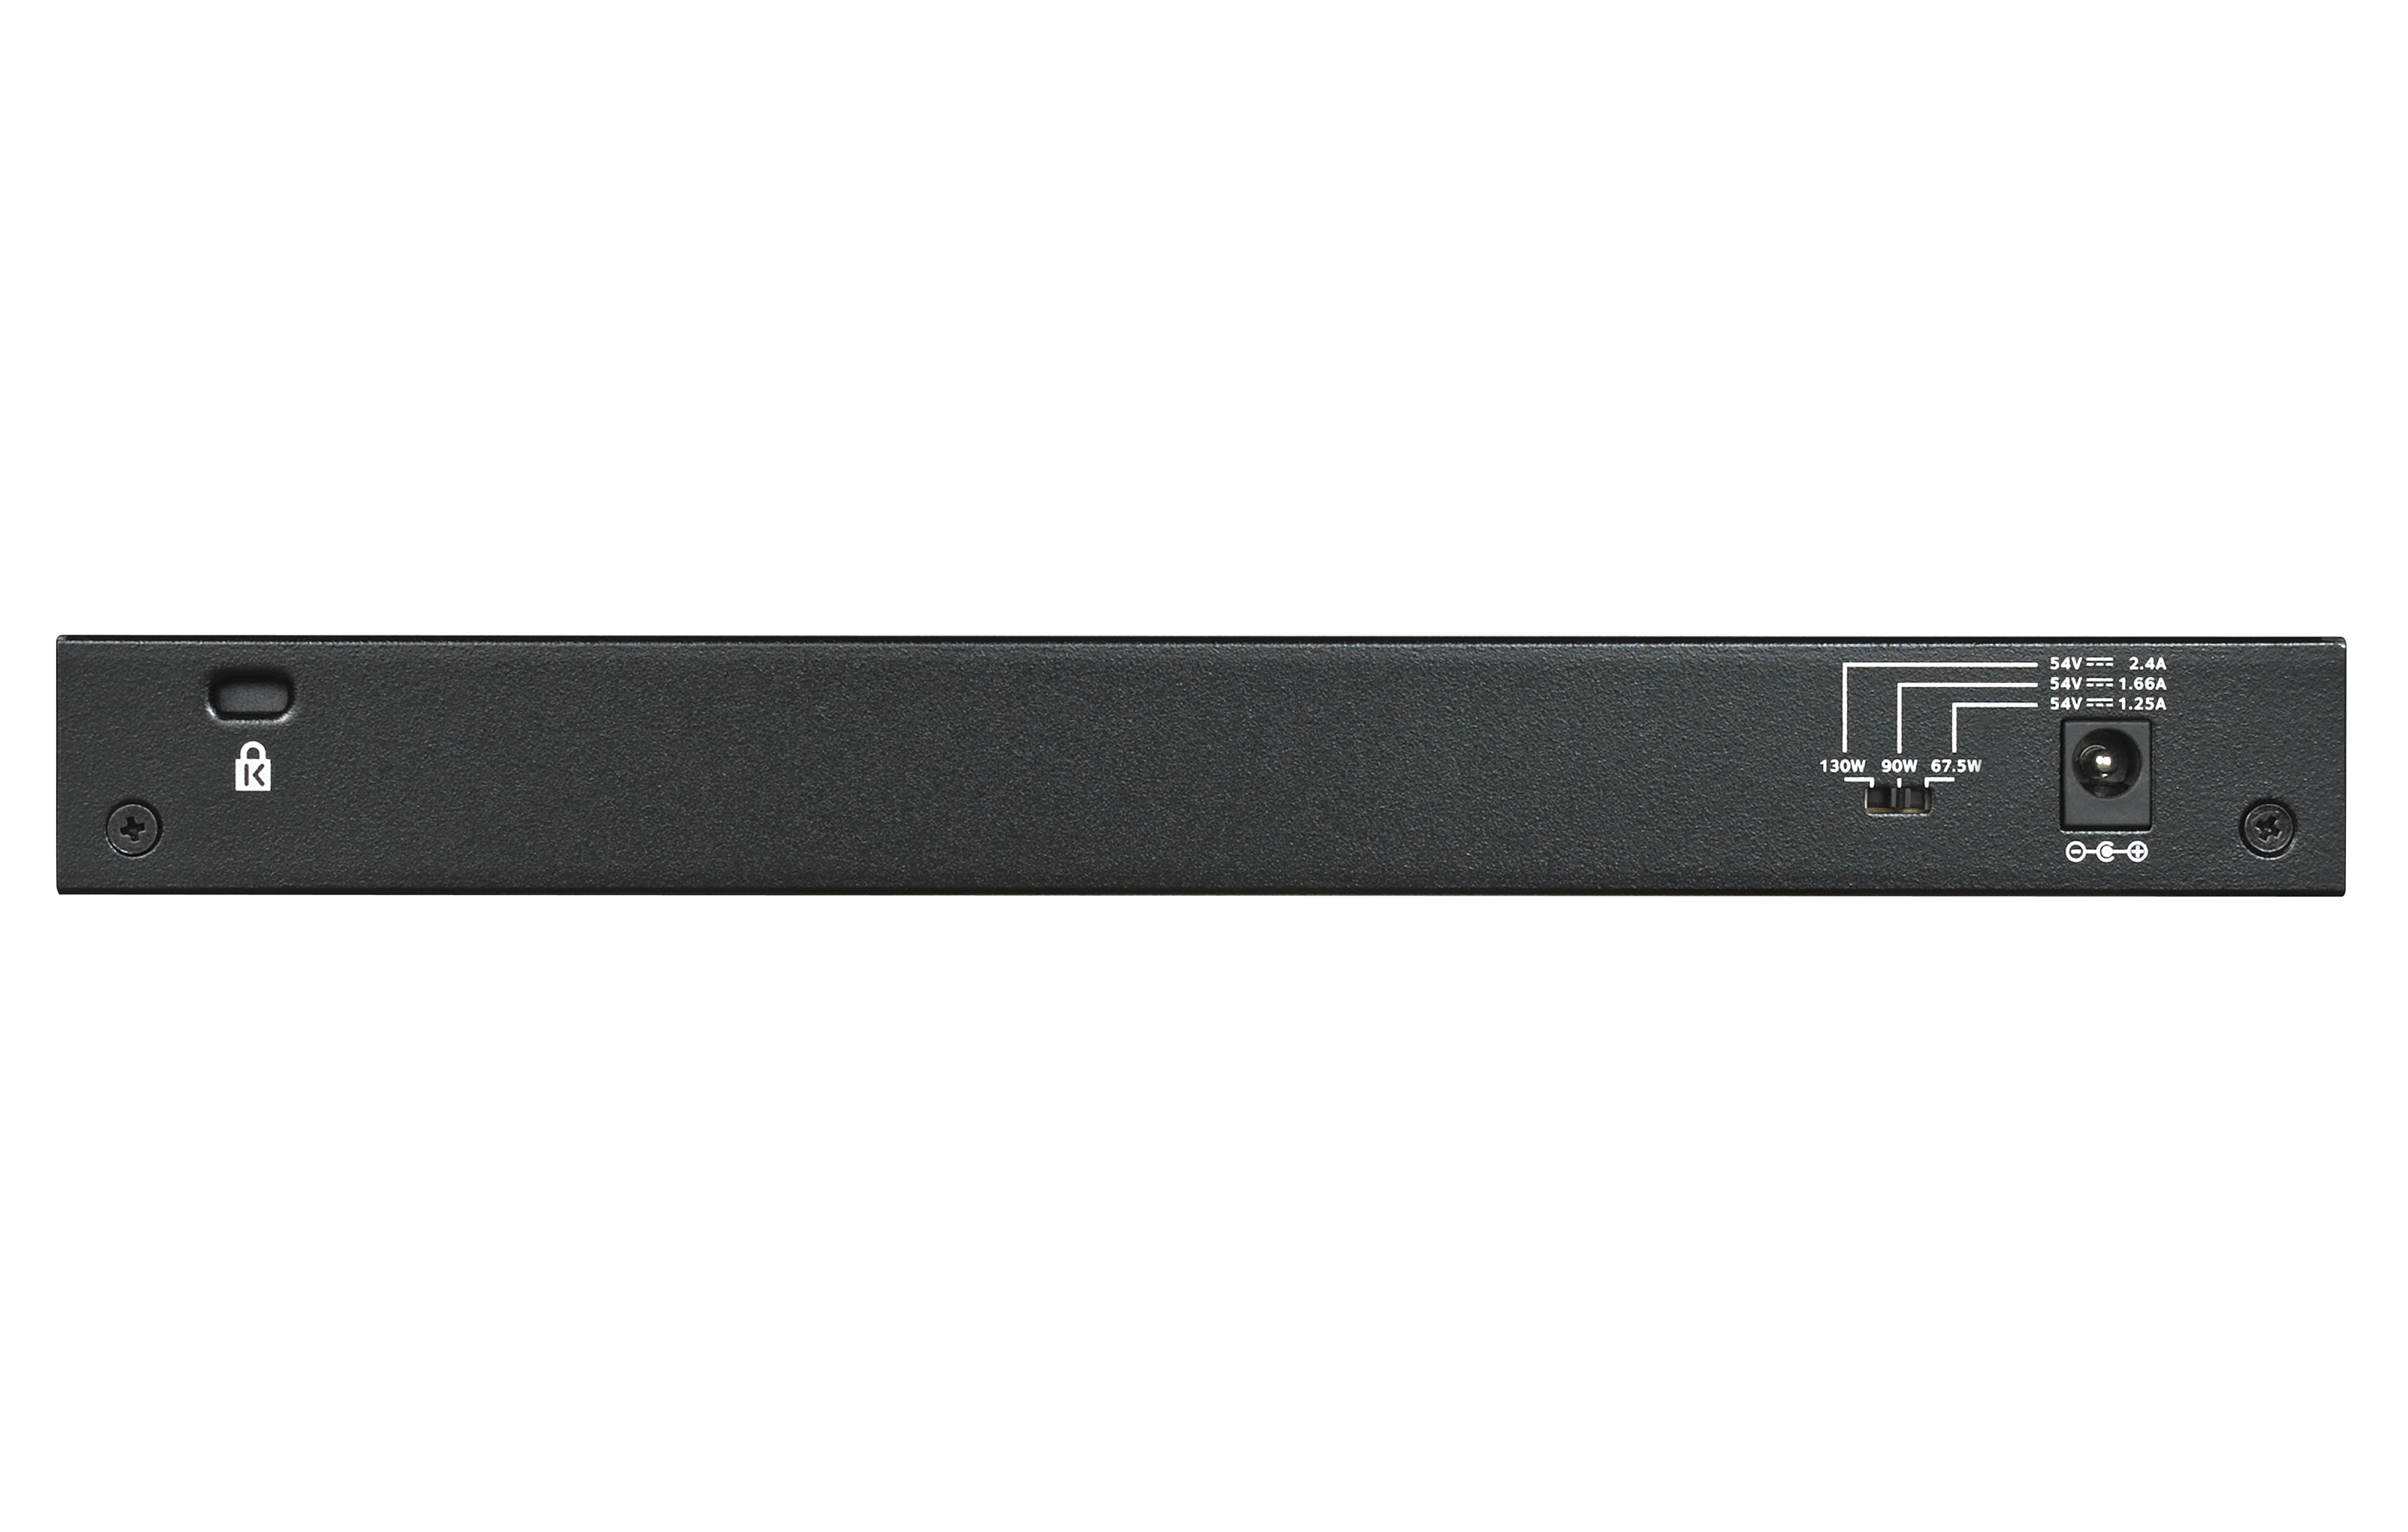 Netgear GS308PP - Switch - unmanaged - 8 x 10/100/1000 (PoE+)